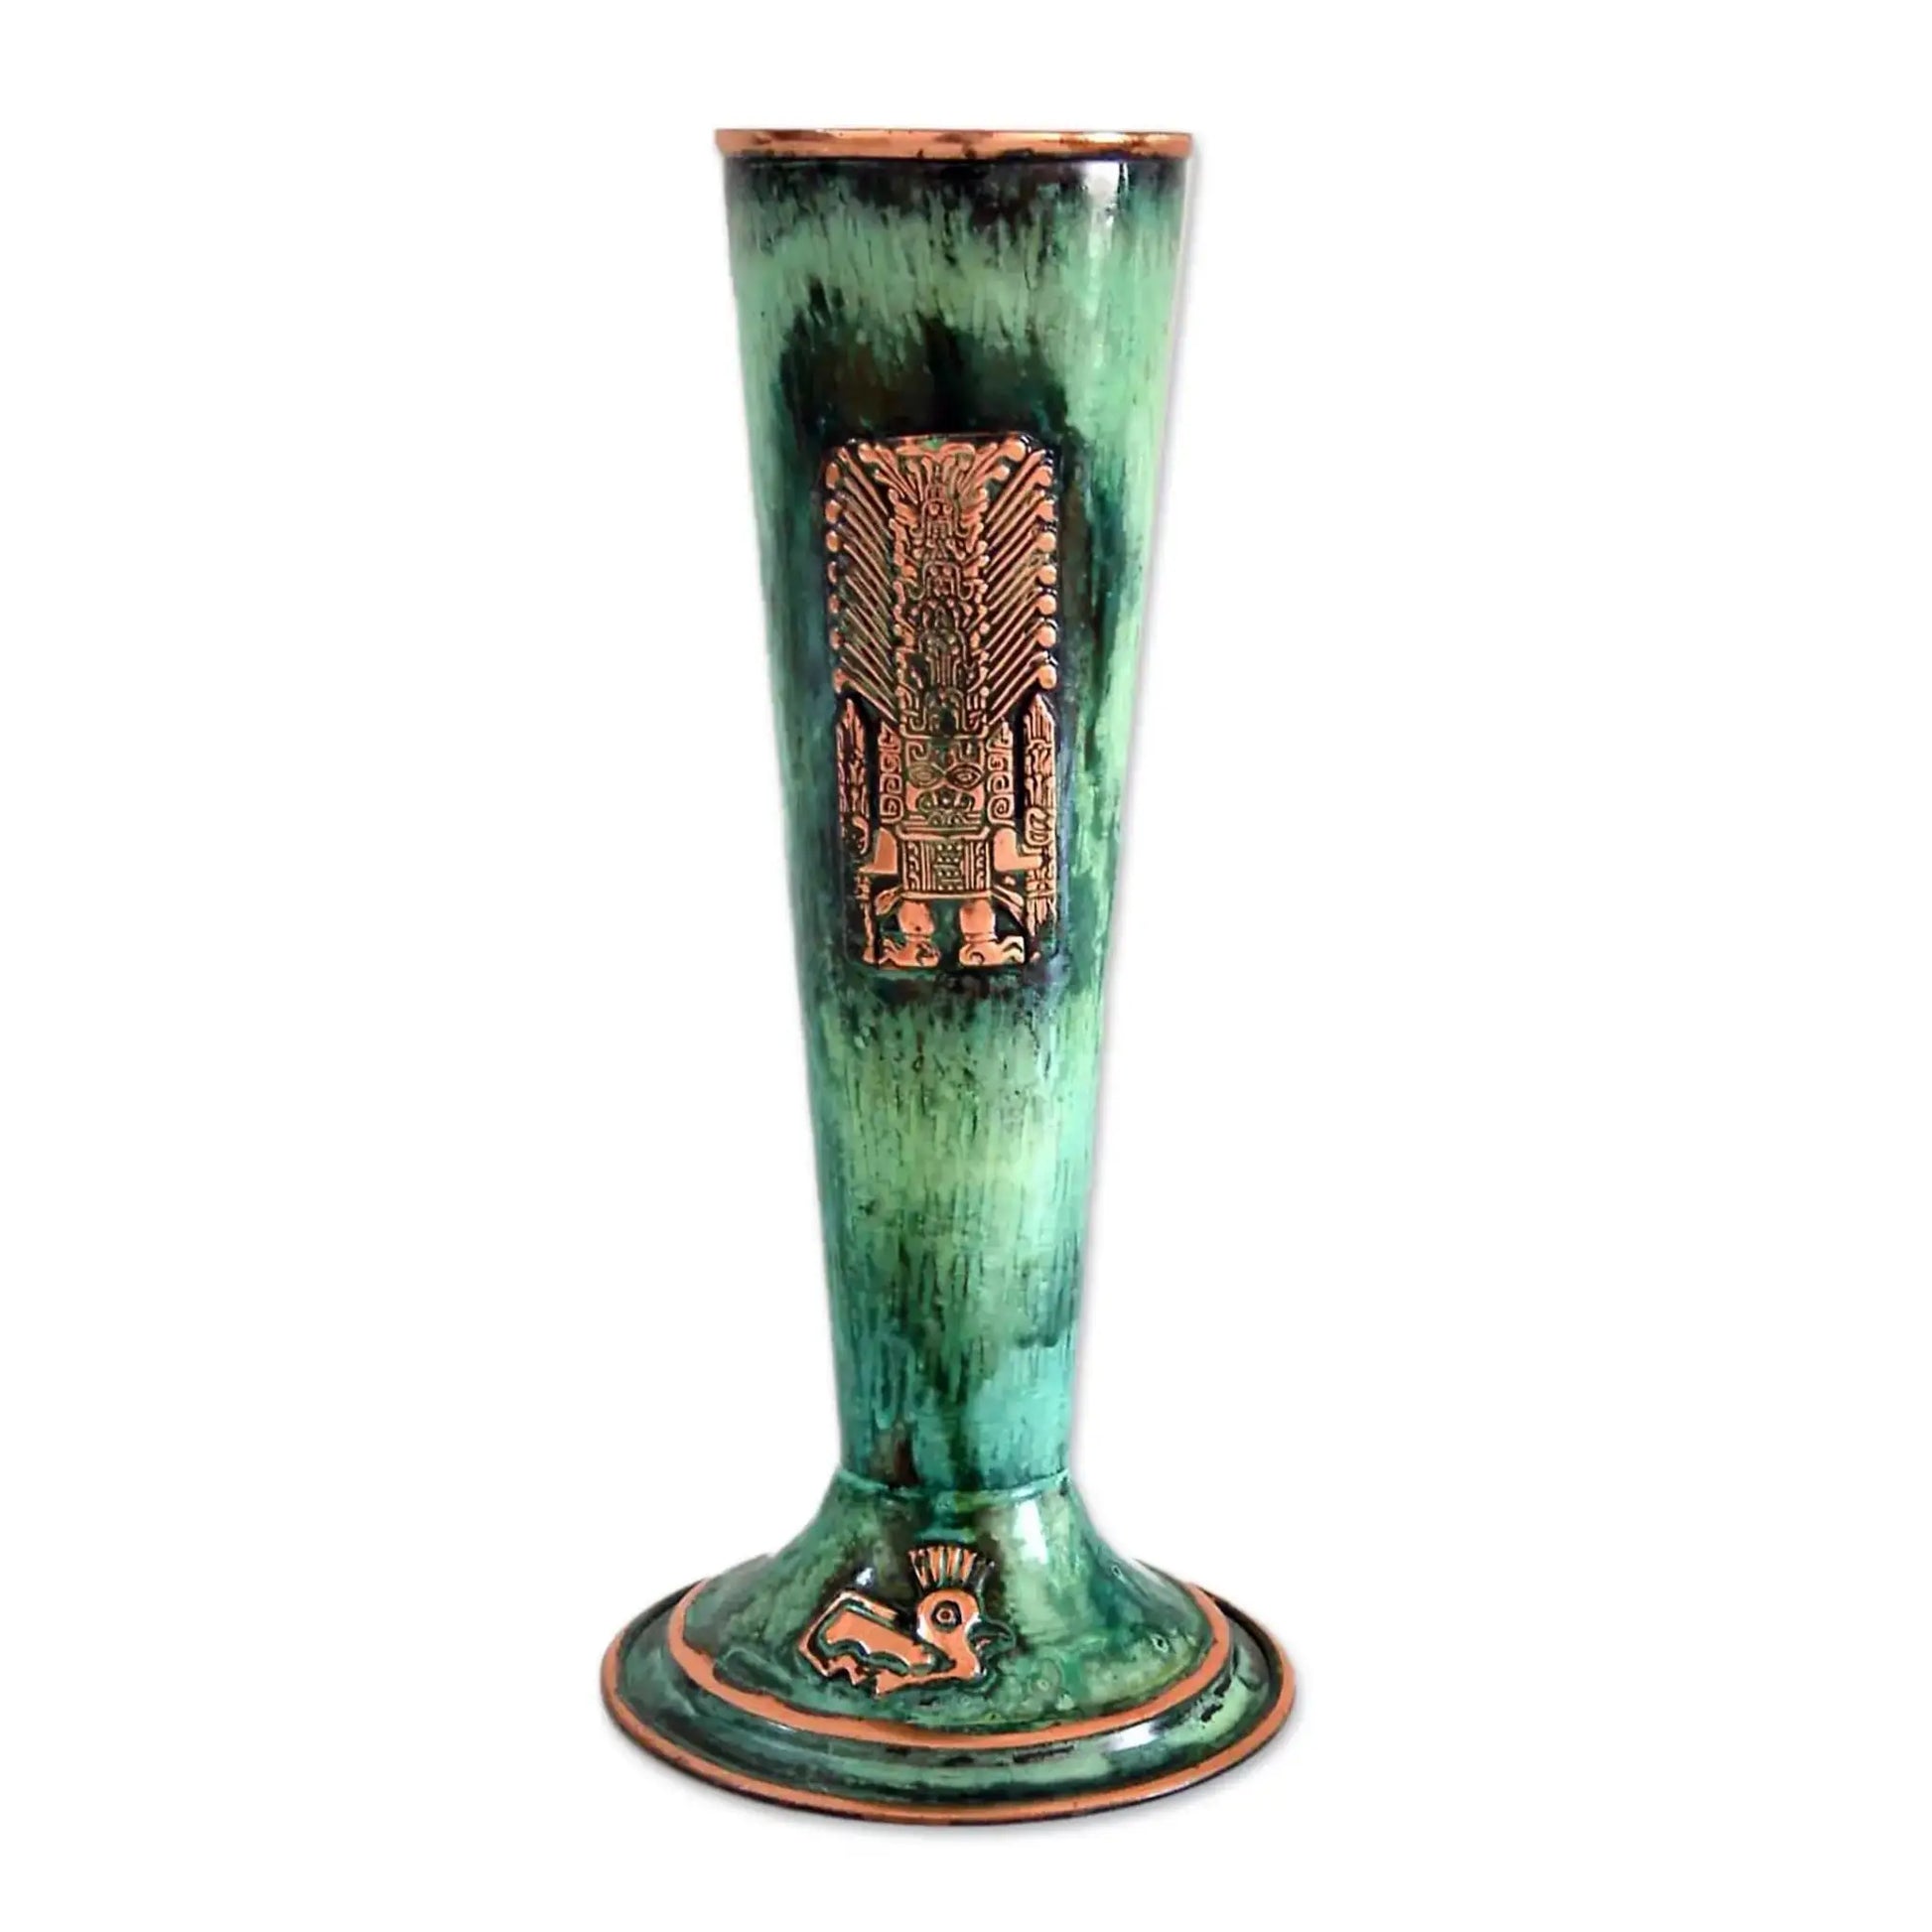 King’s Sacrifice - Copper and Bronze Tumi Vase - Art